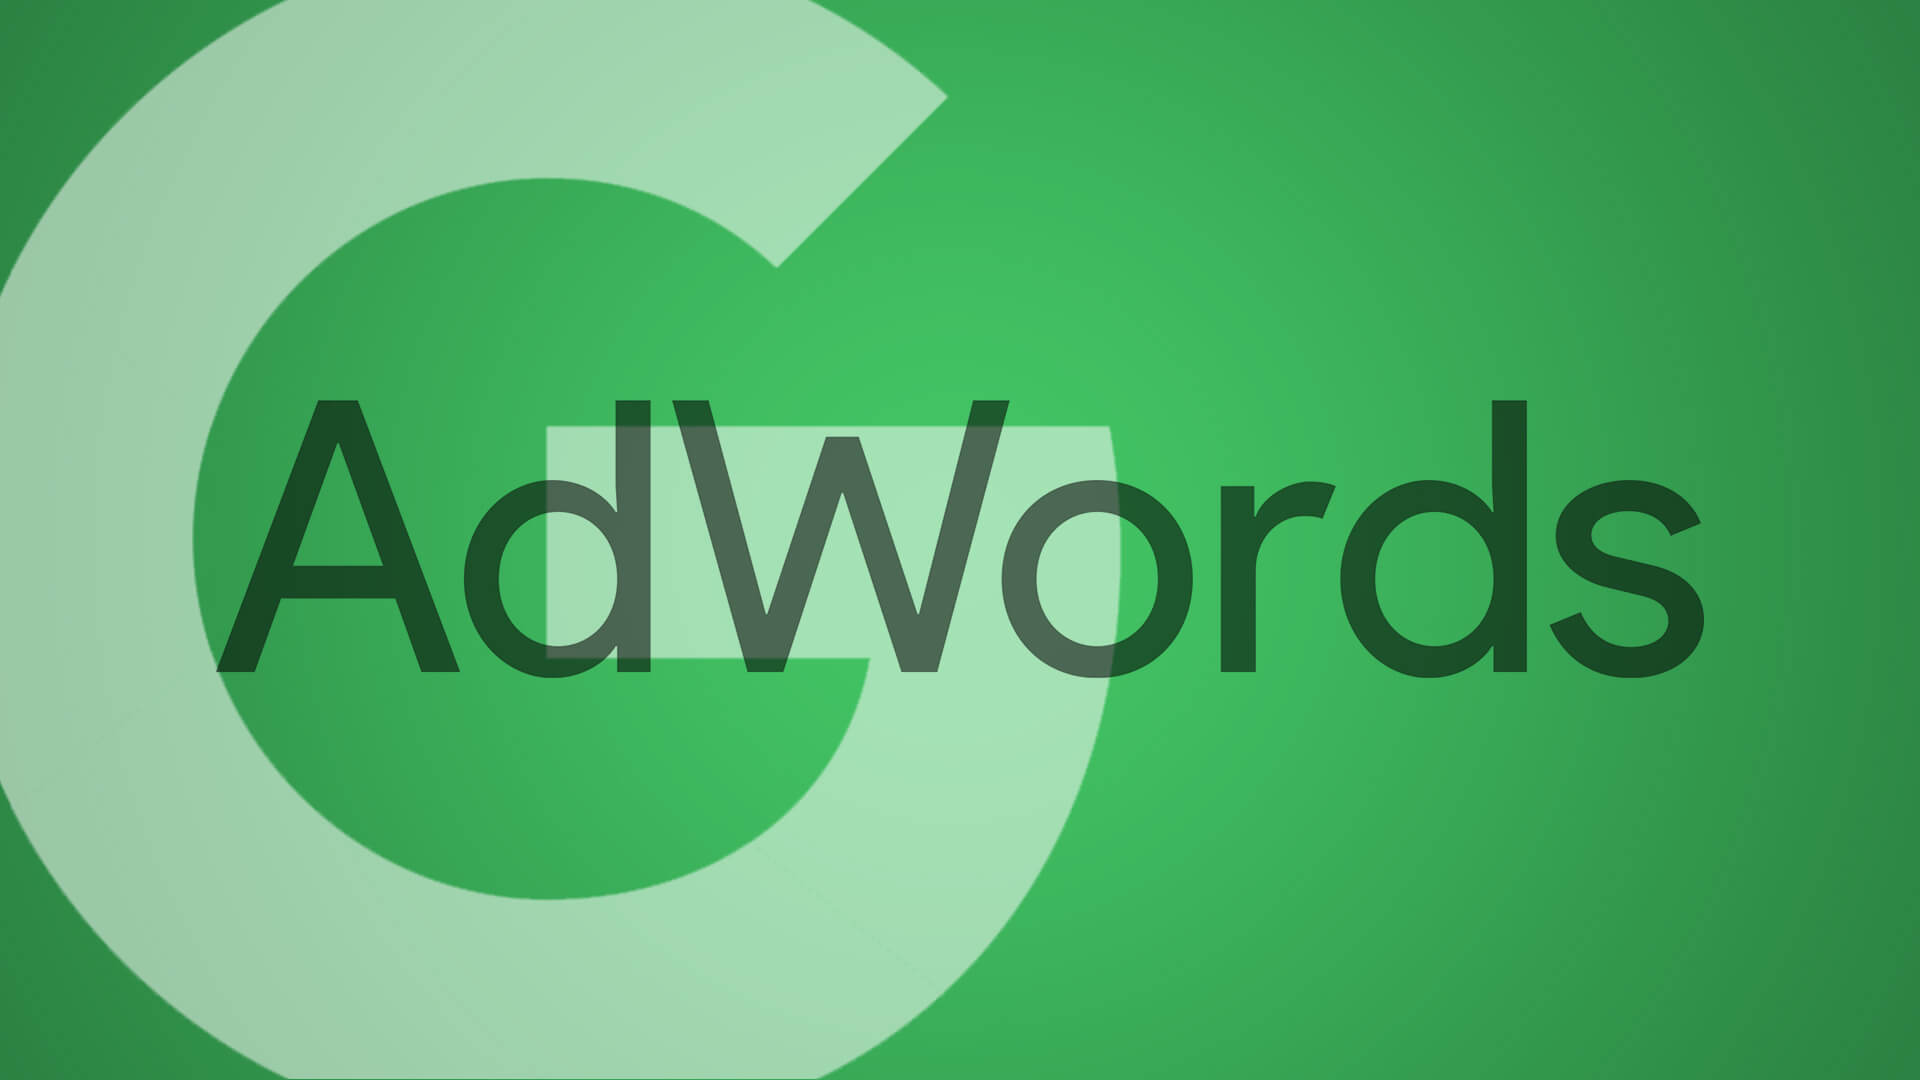 google-adwords-green3-1920